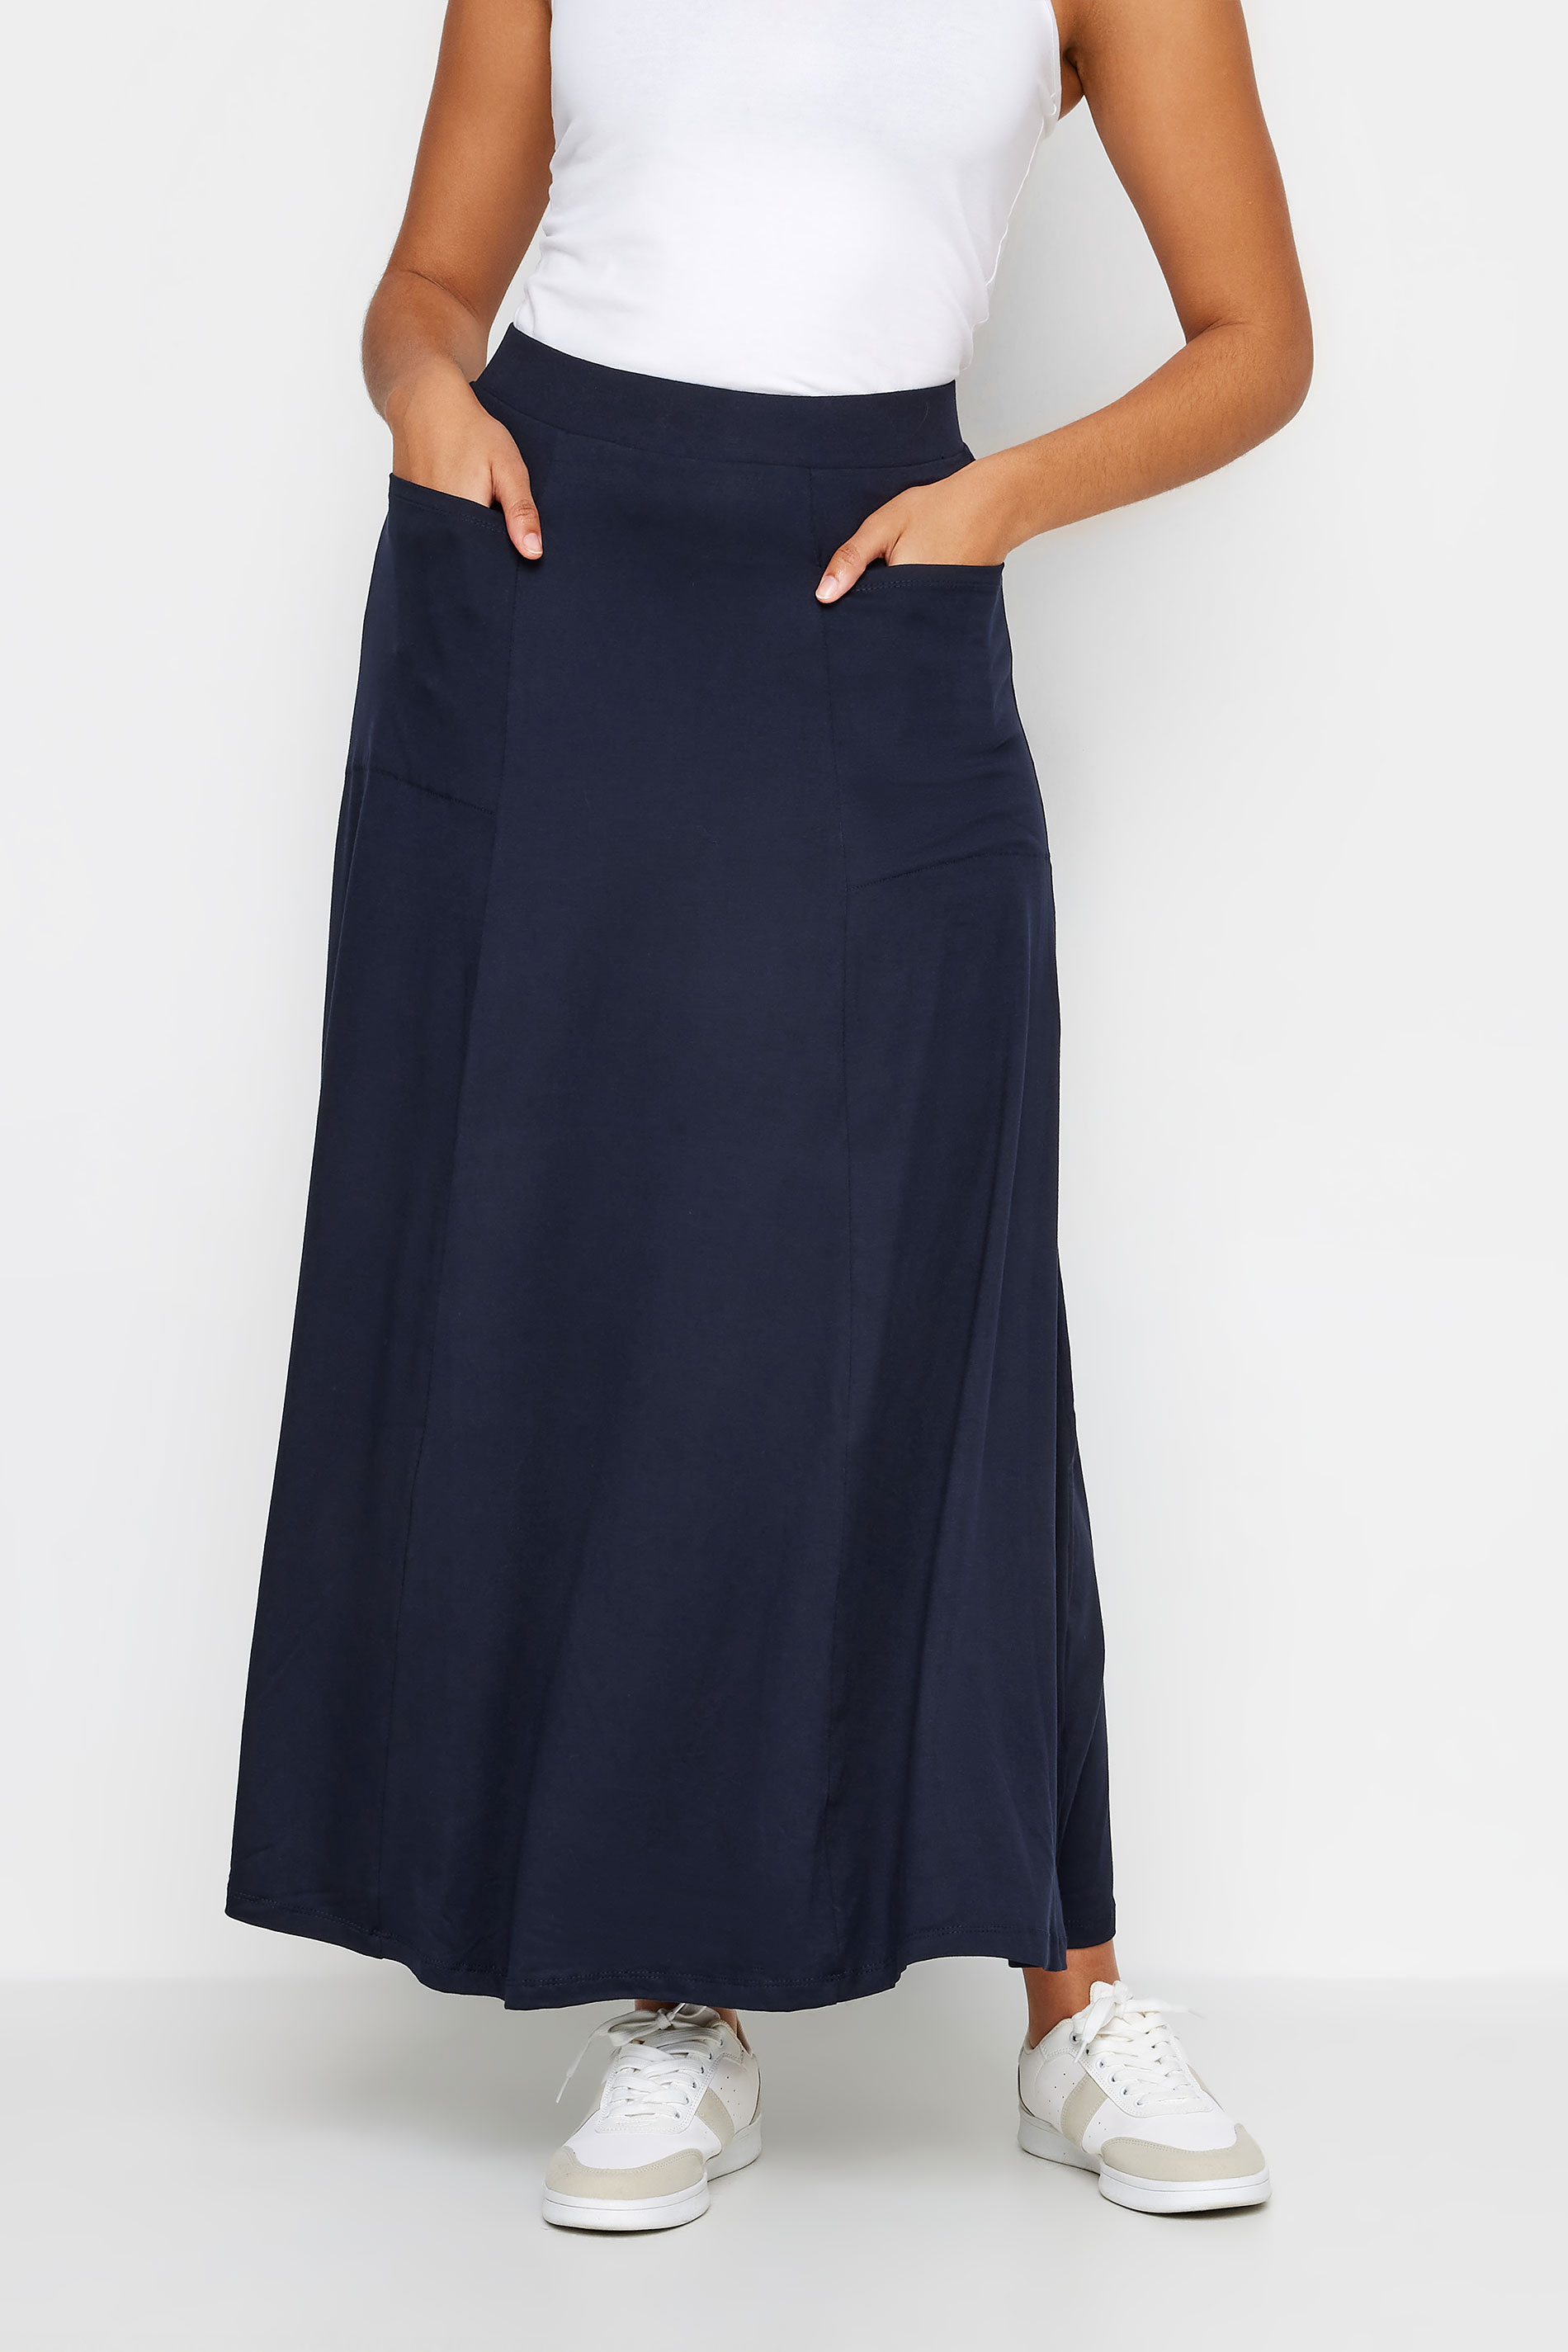 M&Co Navy Blue Pocket Maxi Skirt | M&Co 1